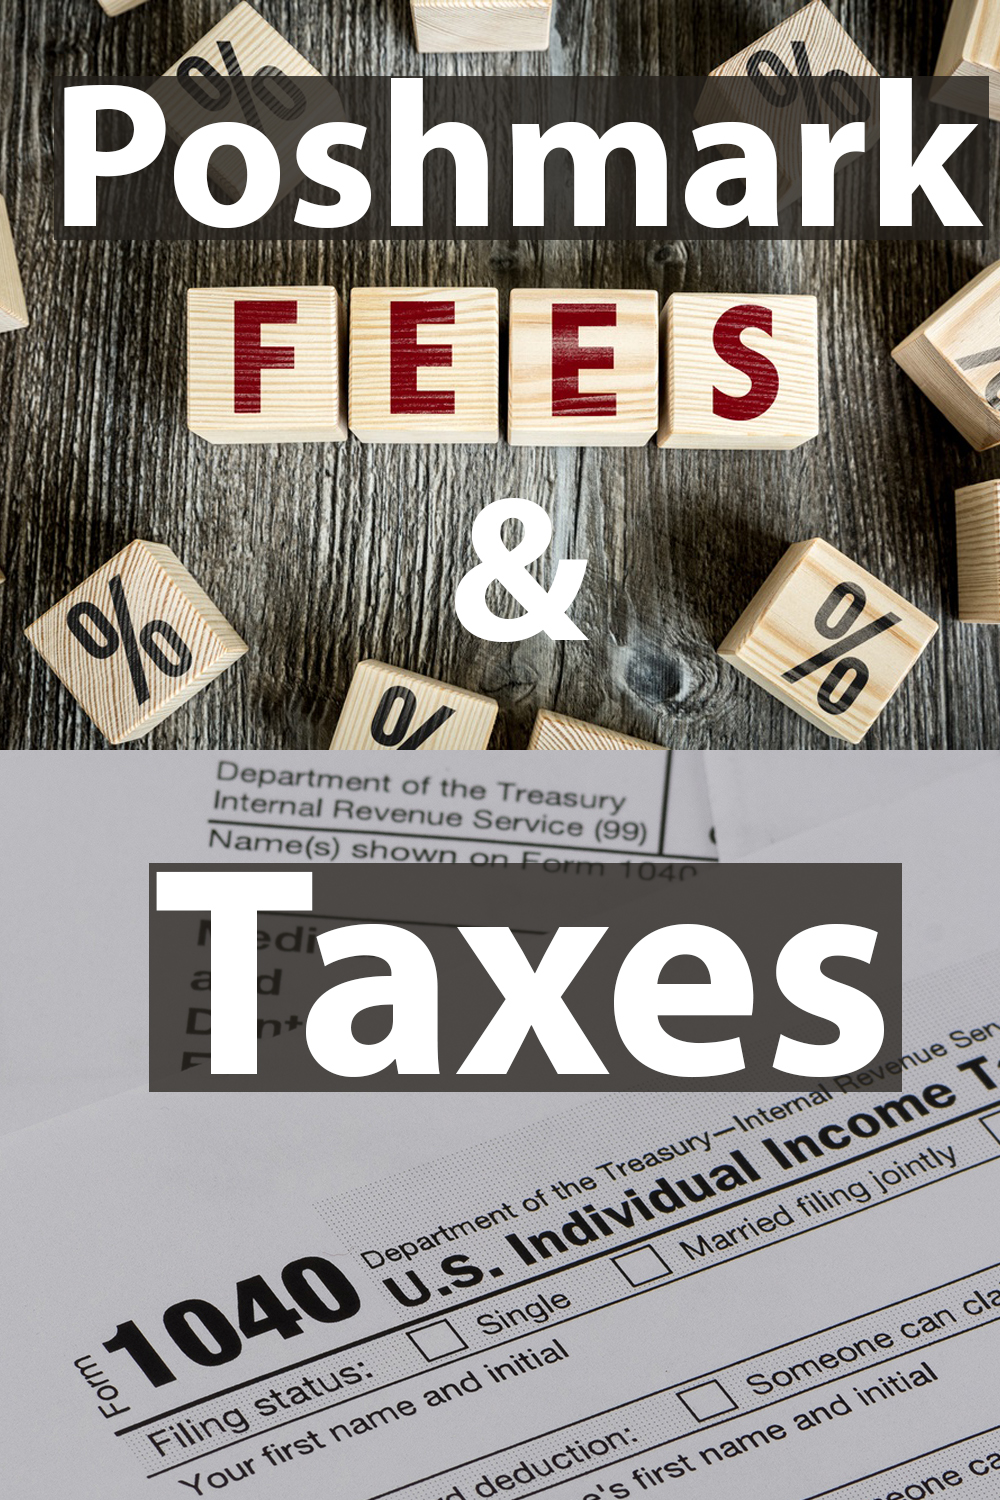 poshmark-fees-and-poshmark-taxes-explained-closet-assistant